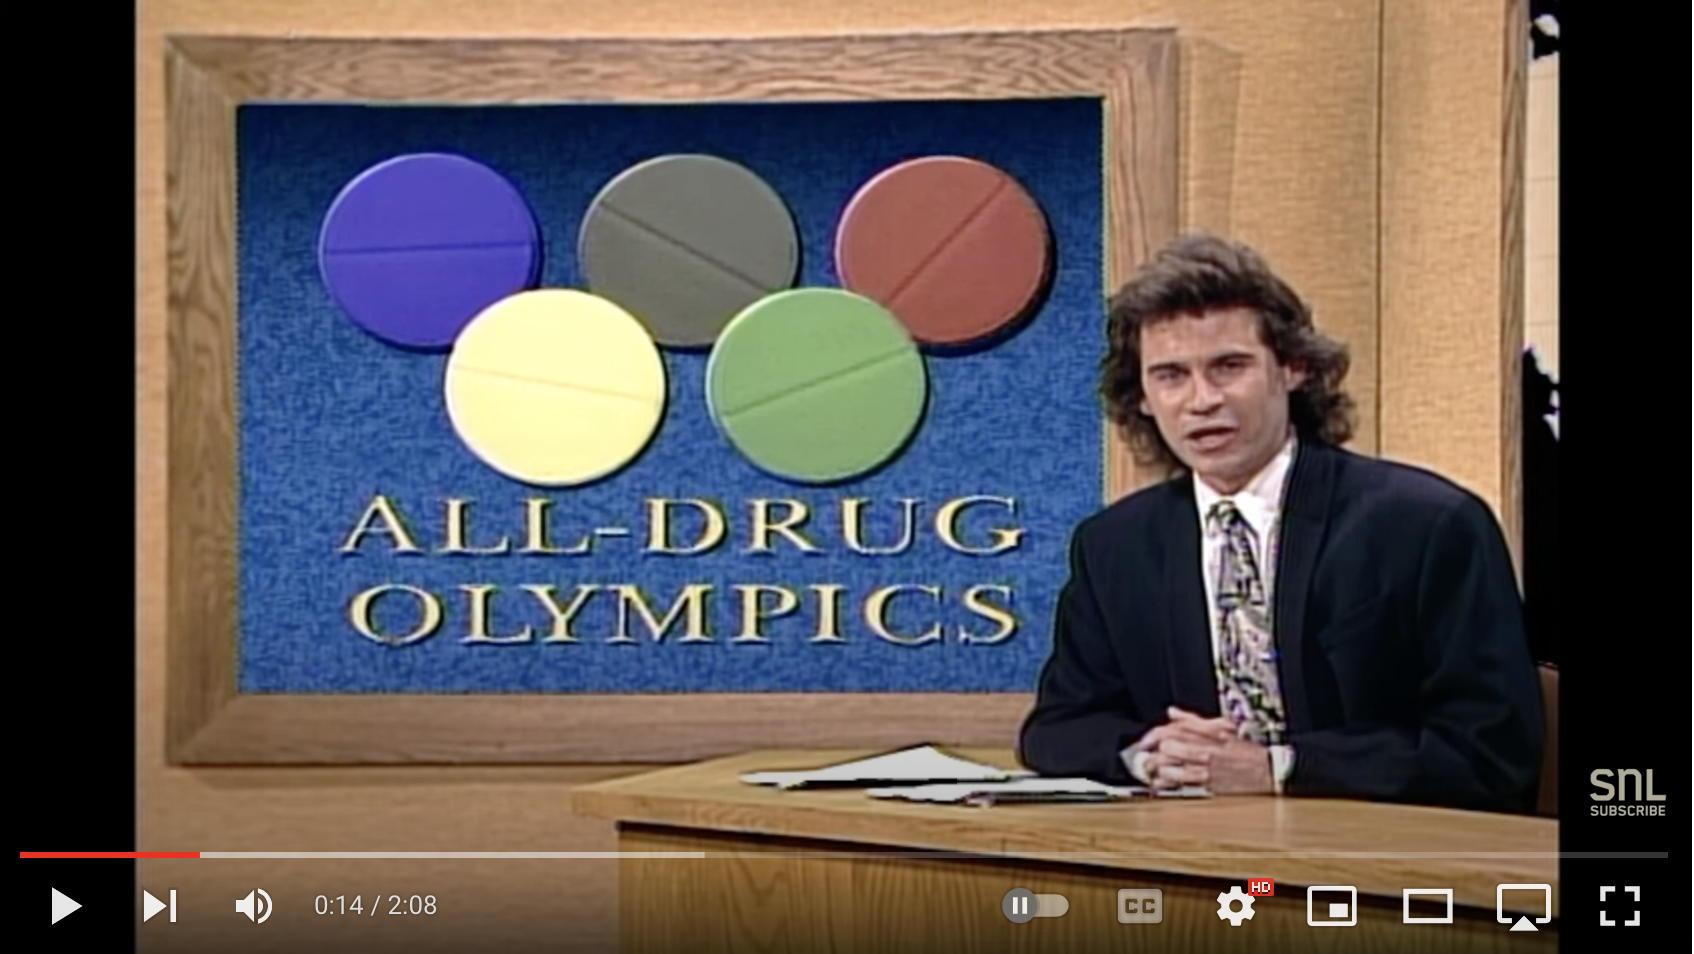 Screenshot of Saturday Night Live’s All-Drug Olympics